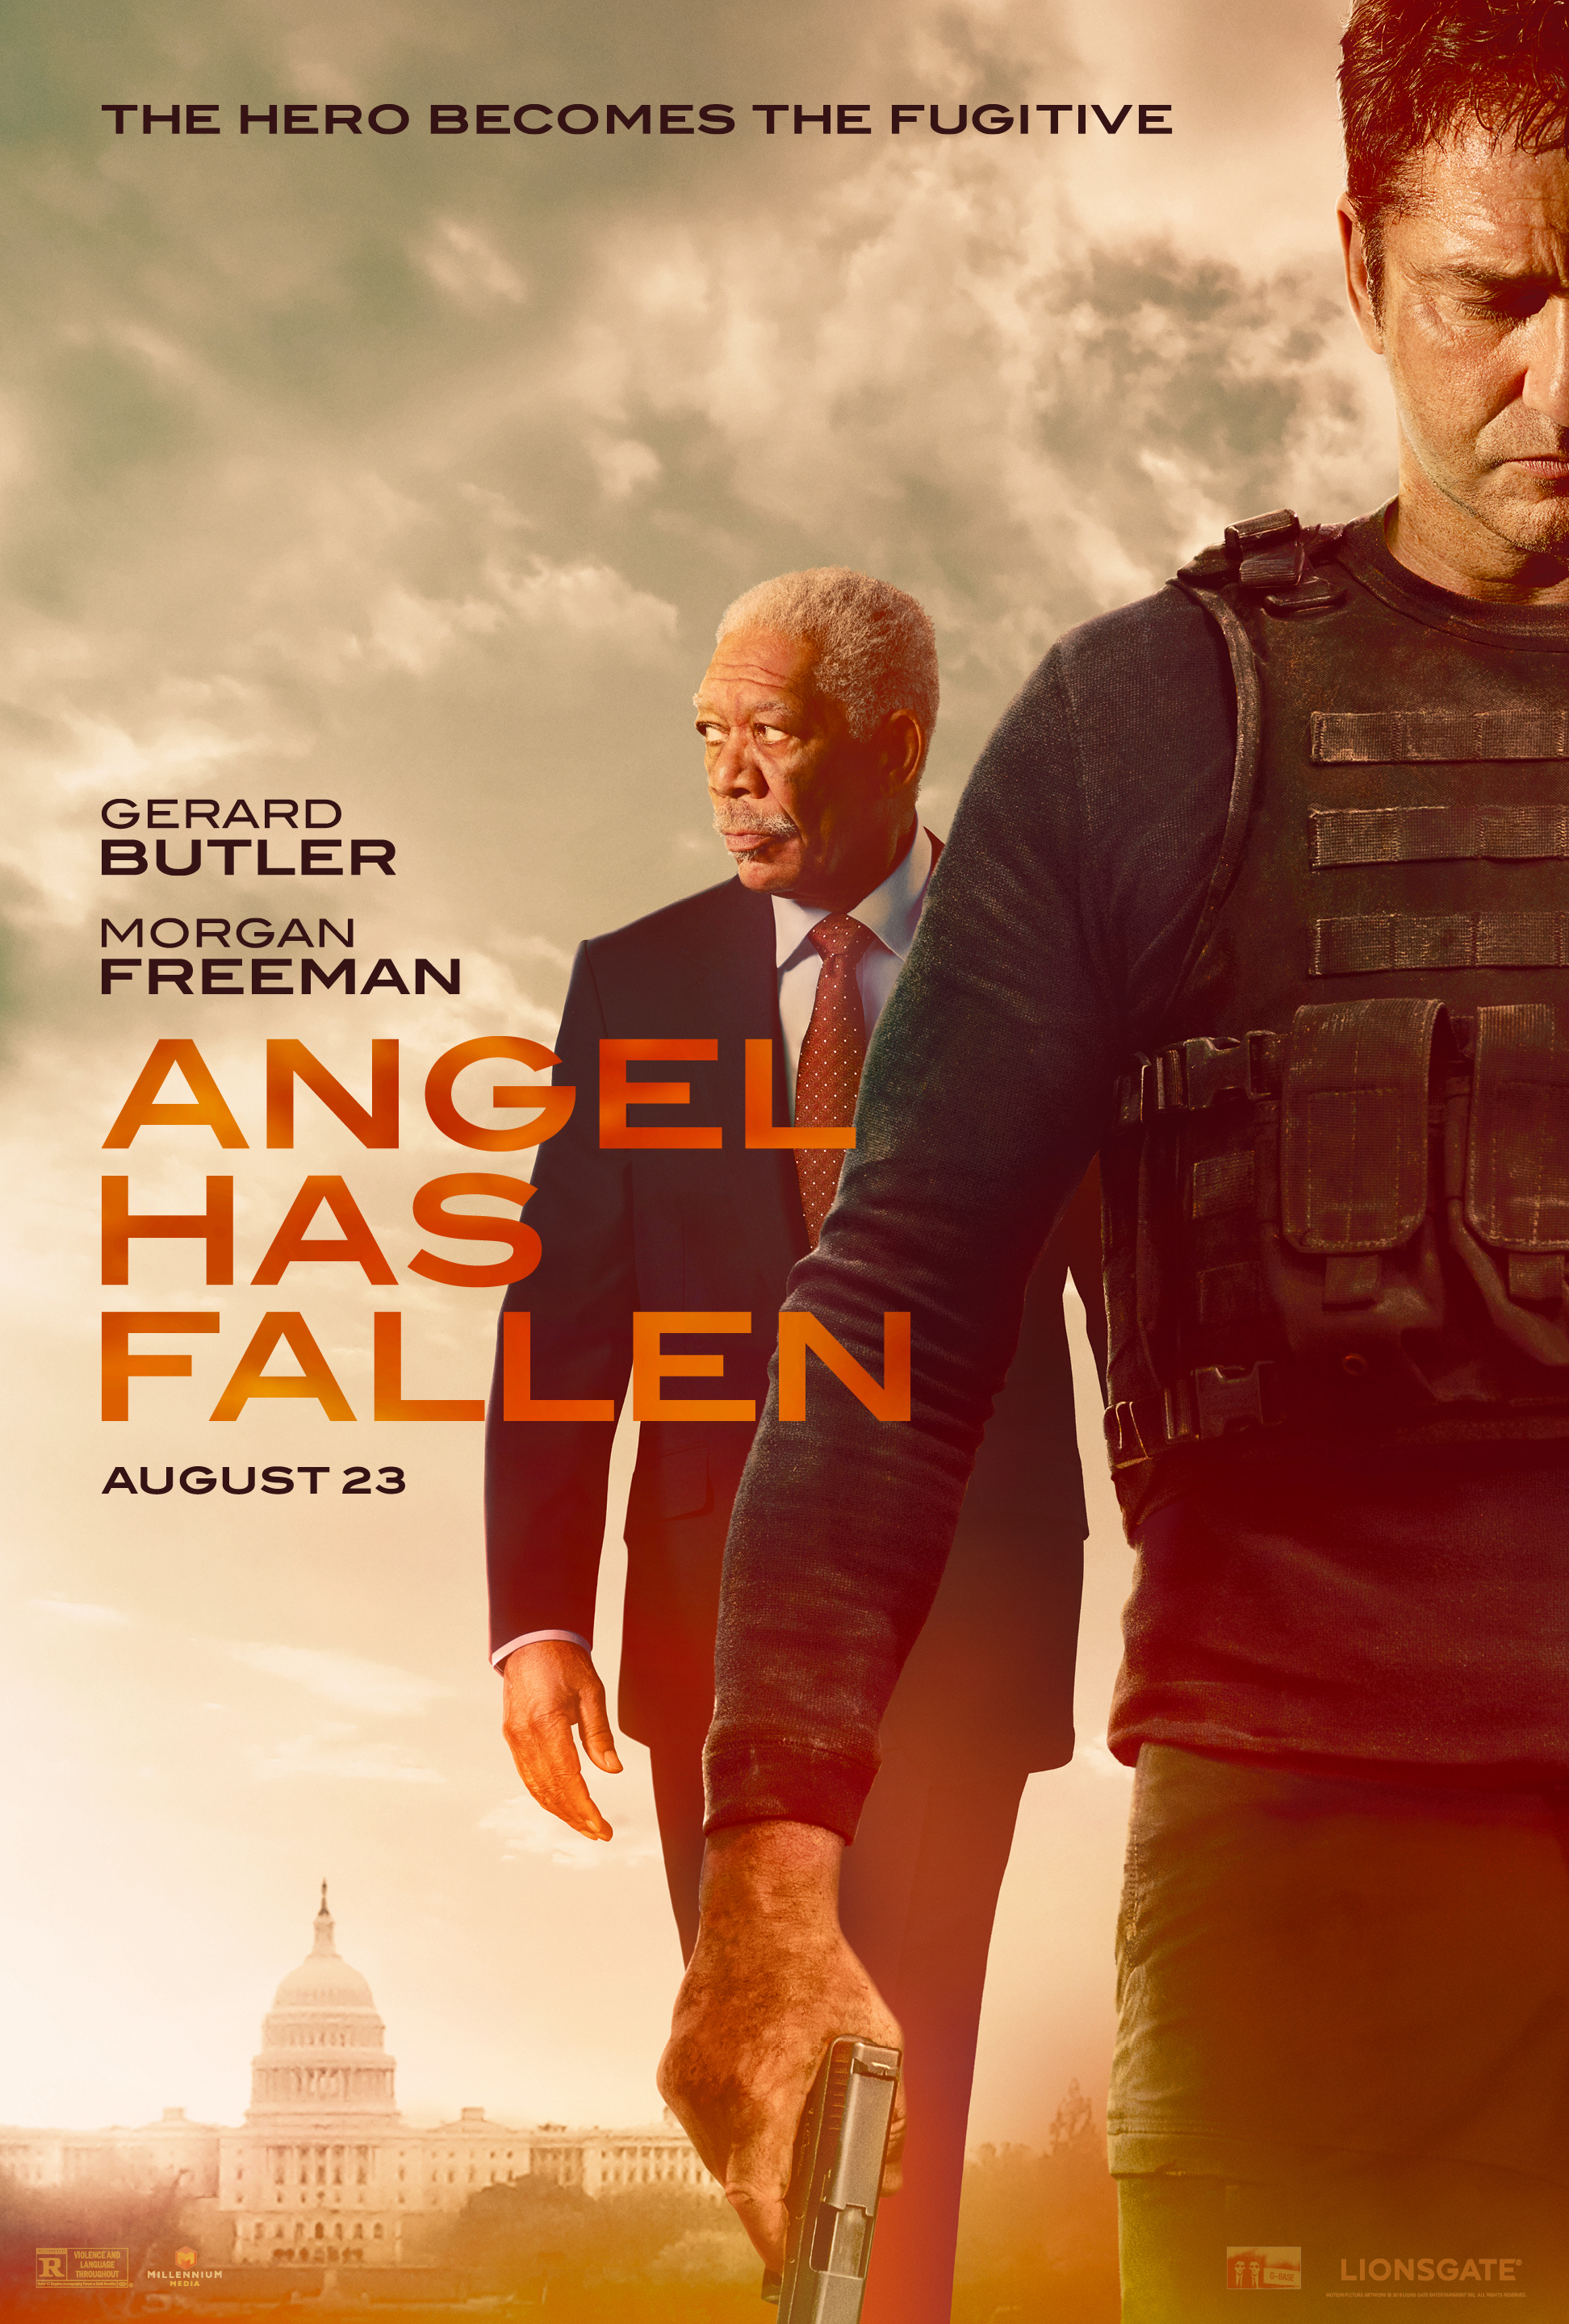 Stiahni si Filmy s titulkama Pad andela / Angel Has Fallen (2019)[BDRip] = CSFD 63%